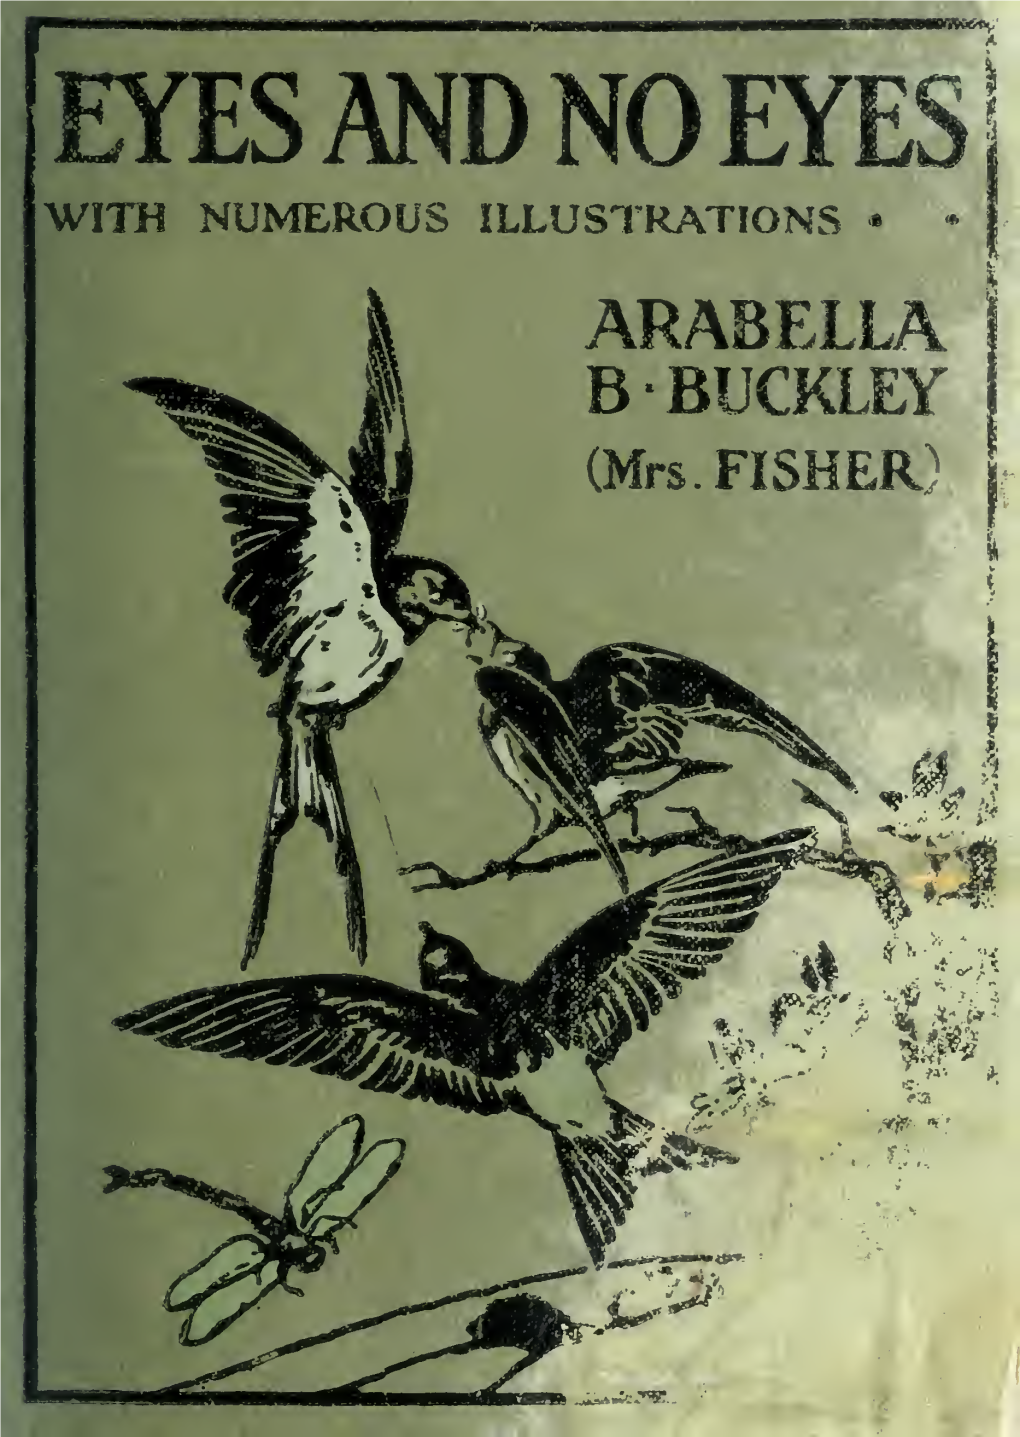 WITH NUMEROUS ILLUSTRATIONS • • ARABELLA B BUCKLEY (Mrs